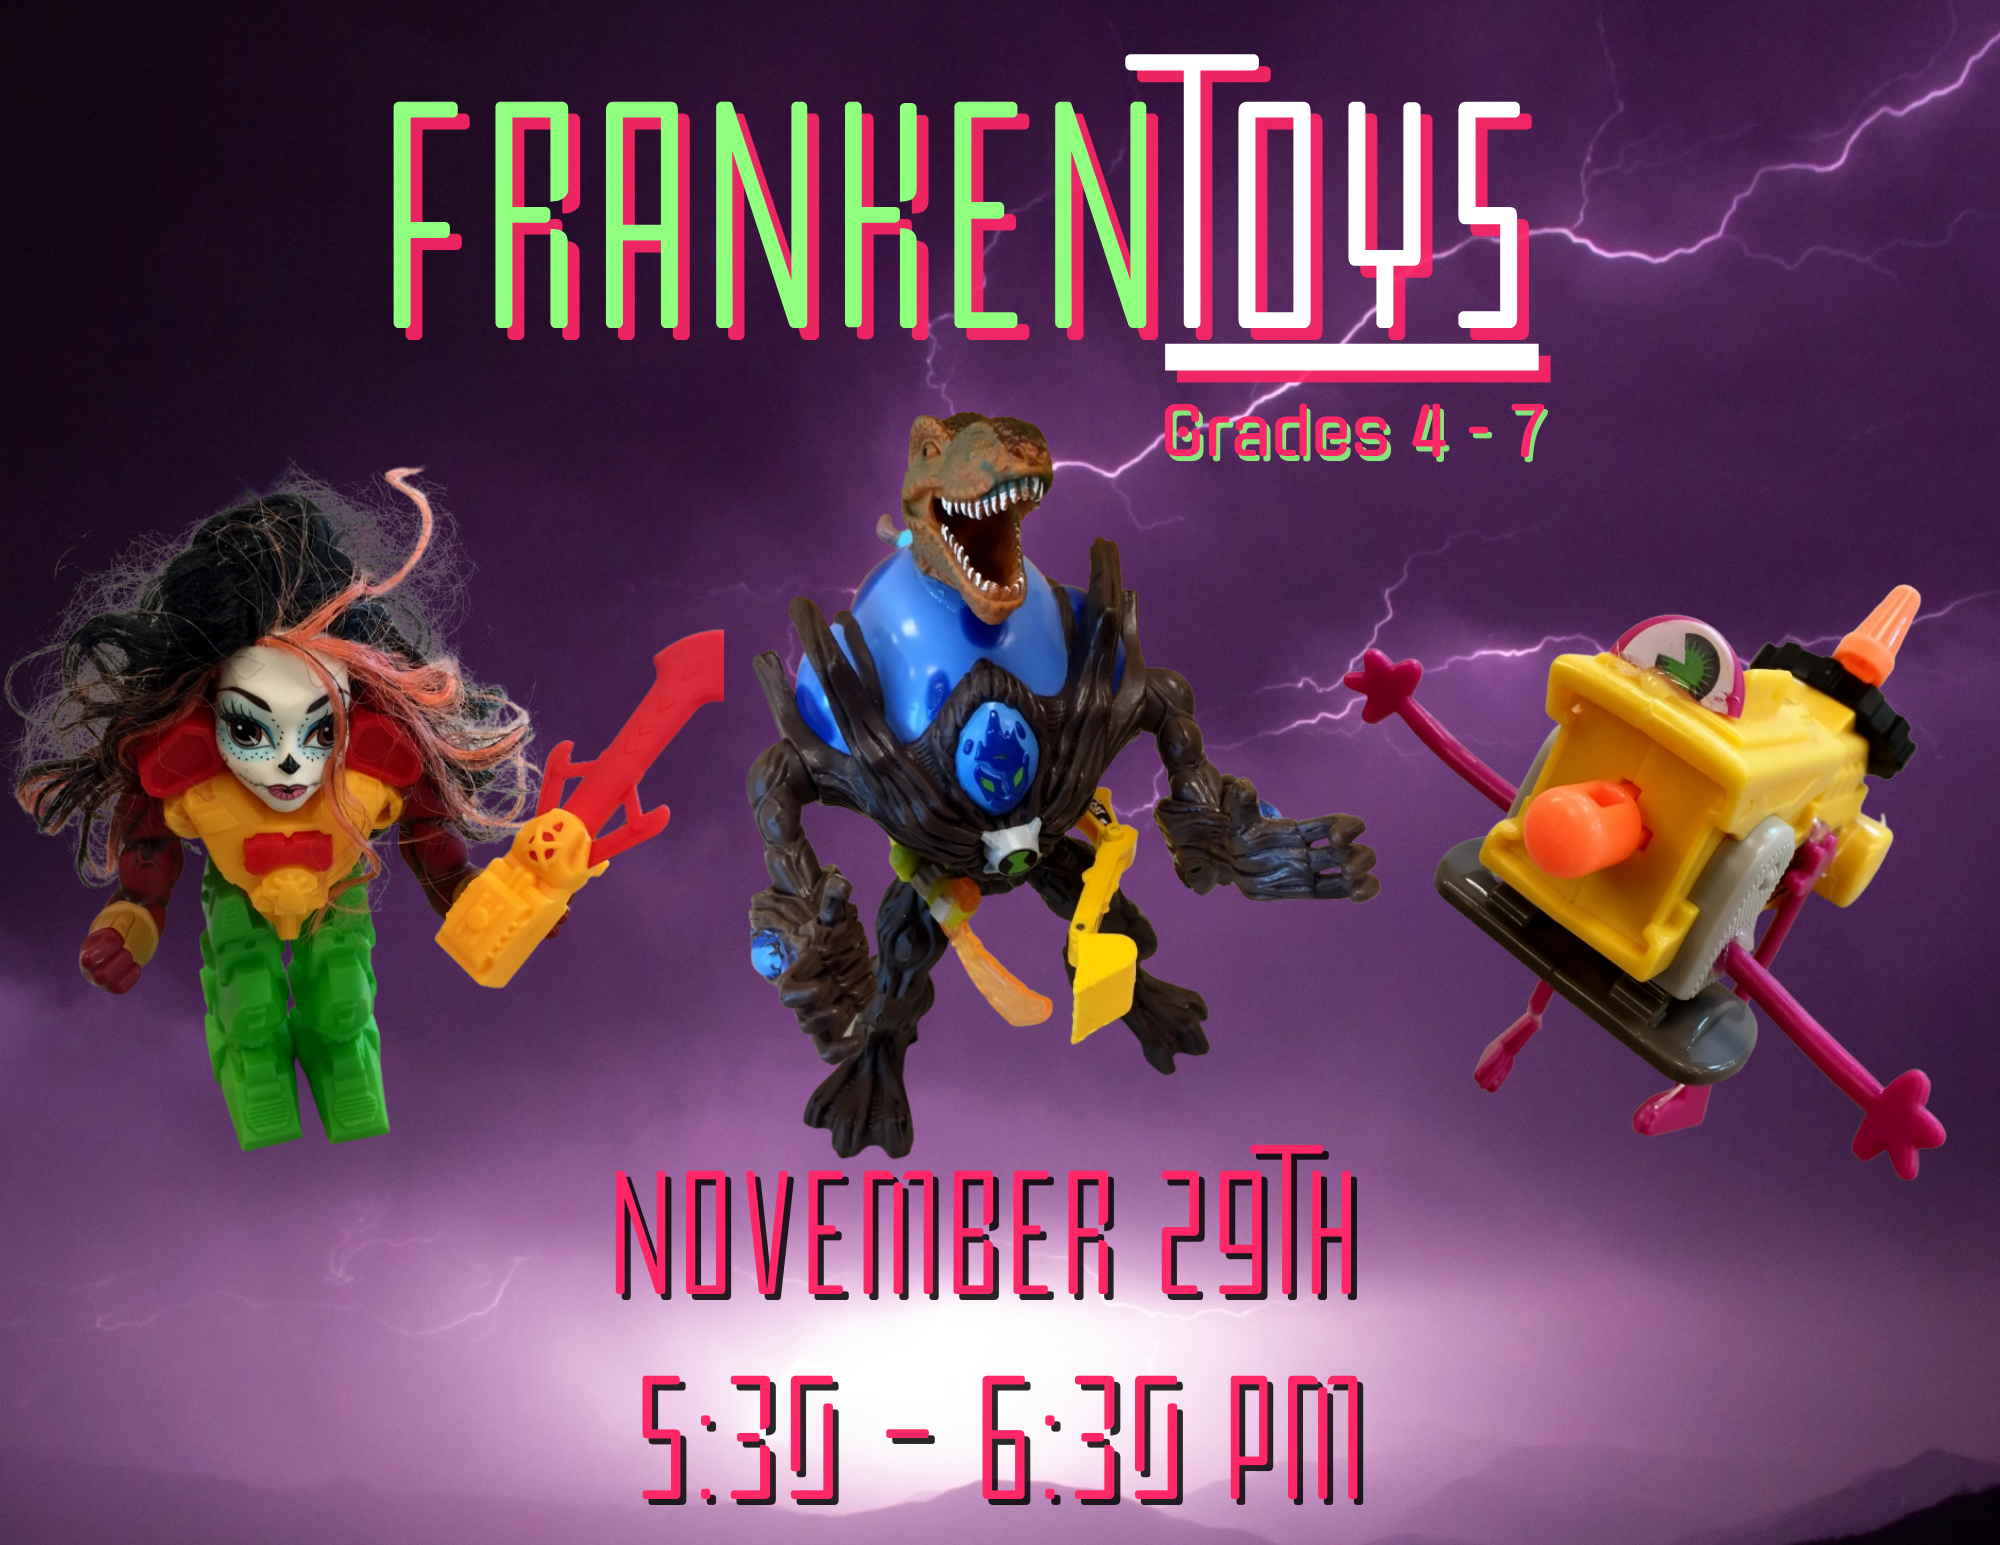 Program flyer featuring examples of "Frankentoys", alongside the following text, "Frankentoys. Grades 4-7. November 29th. 5:30-6:30pm."